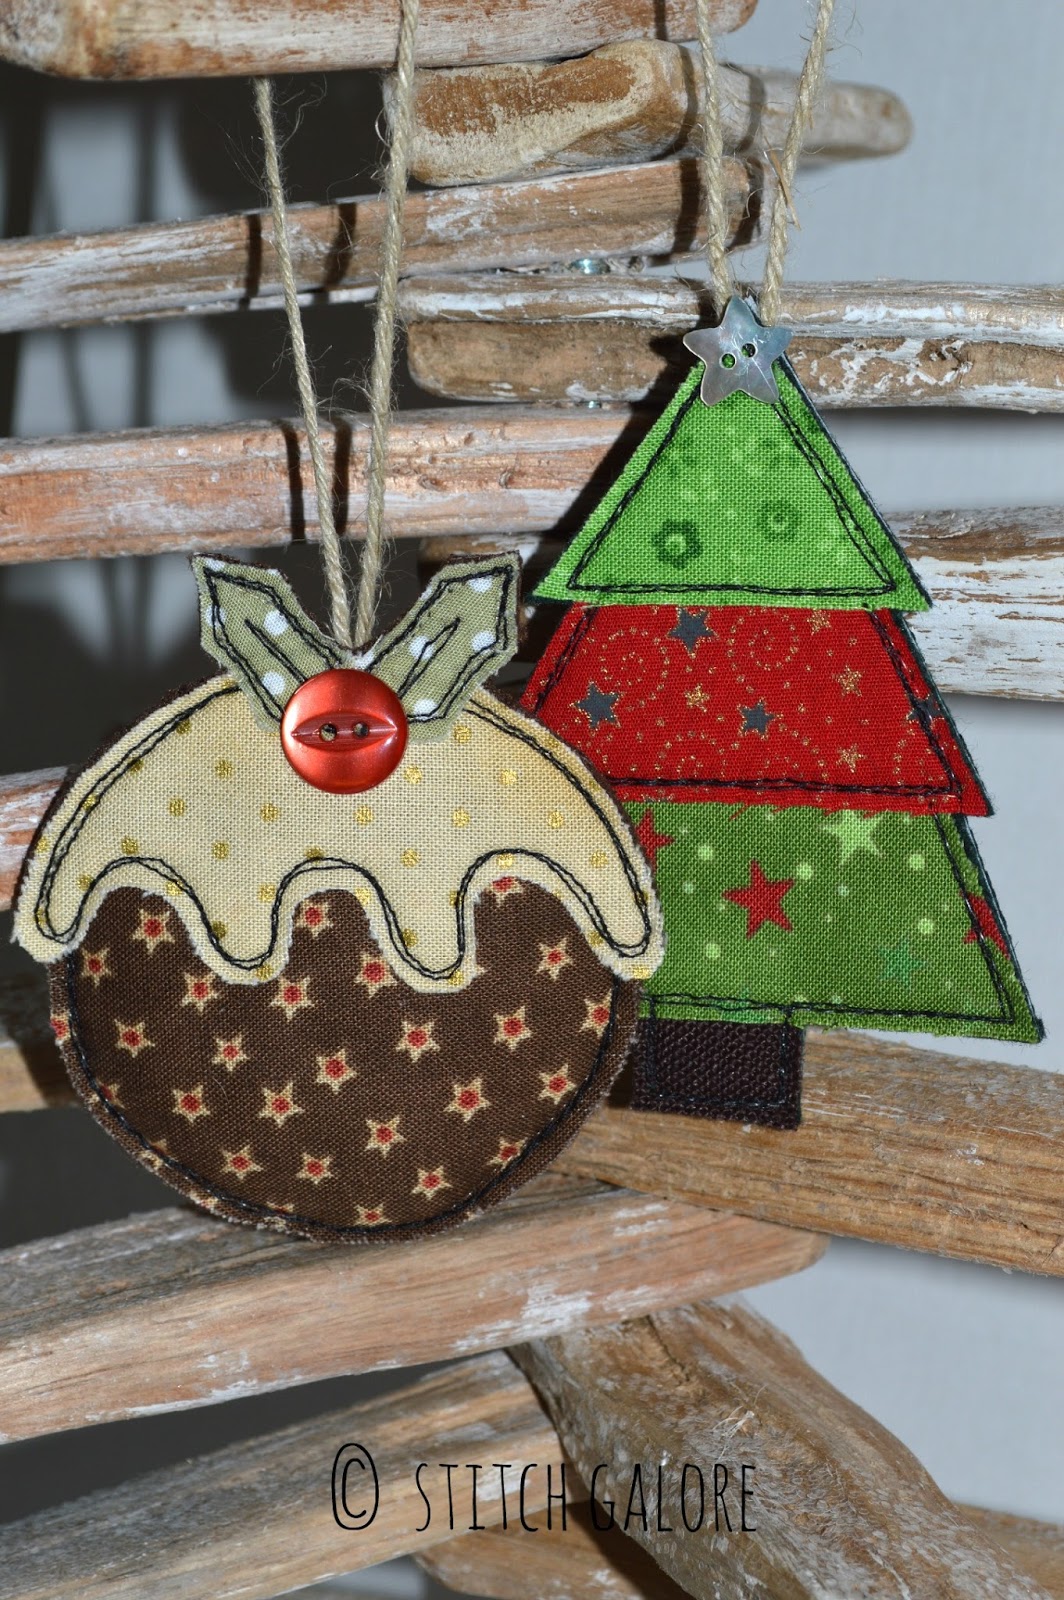 Stitch Galore: Handmade Christmas Pudding and Tree Decorations